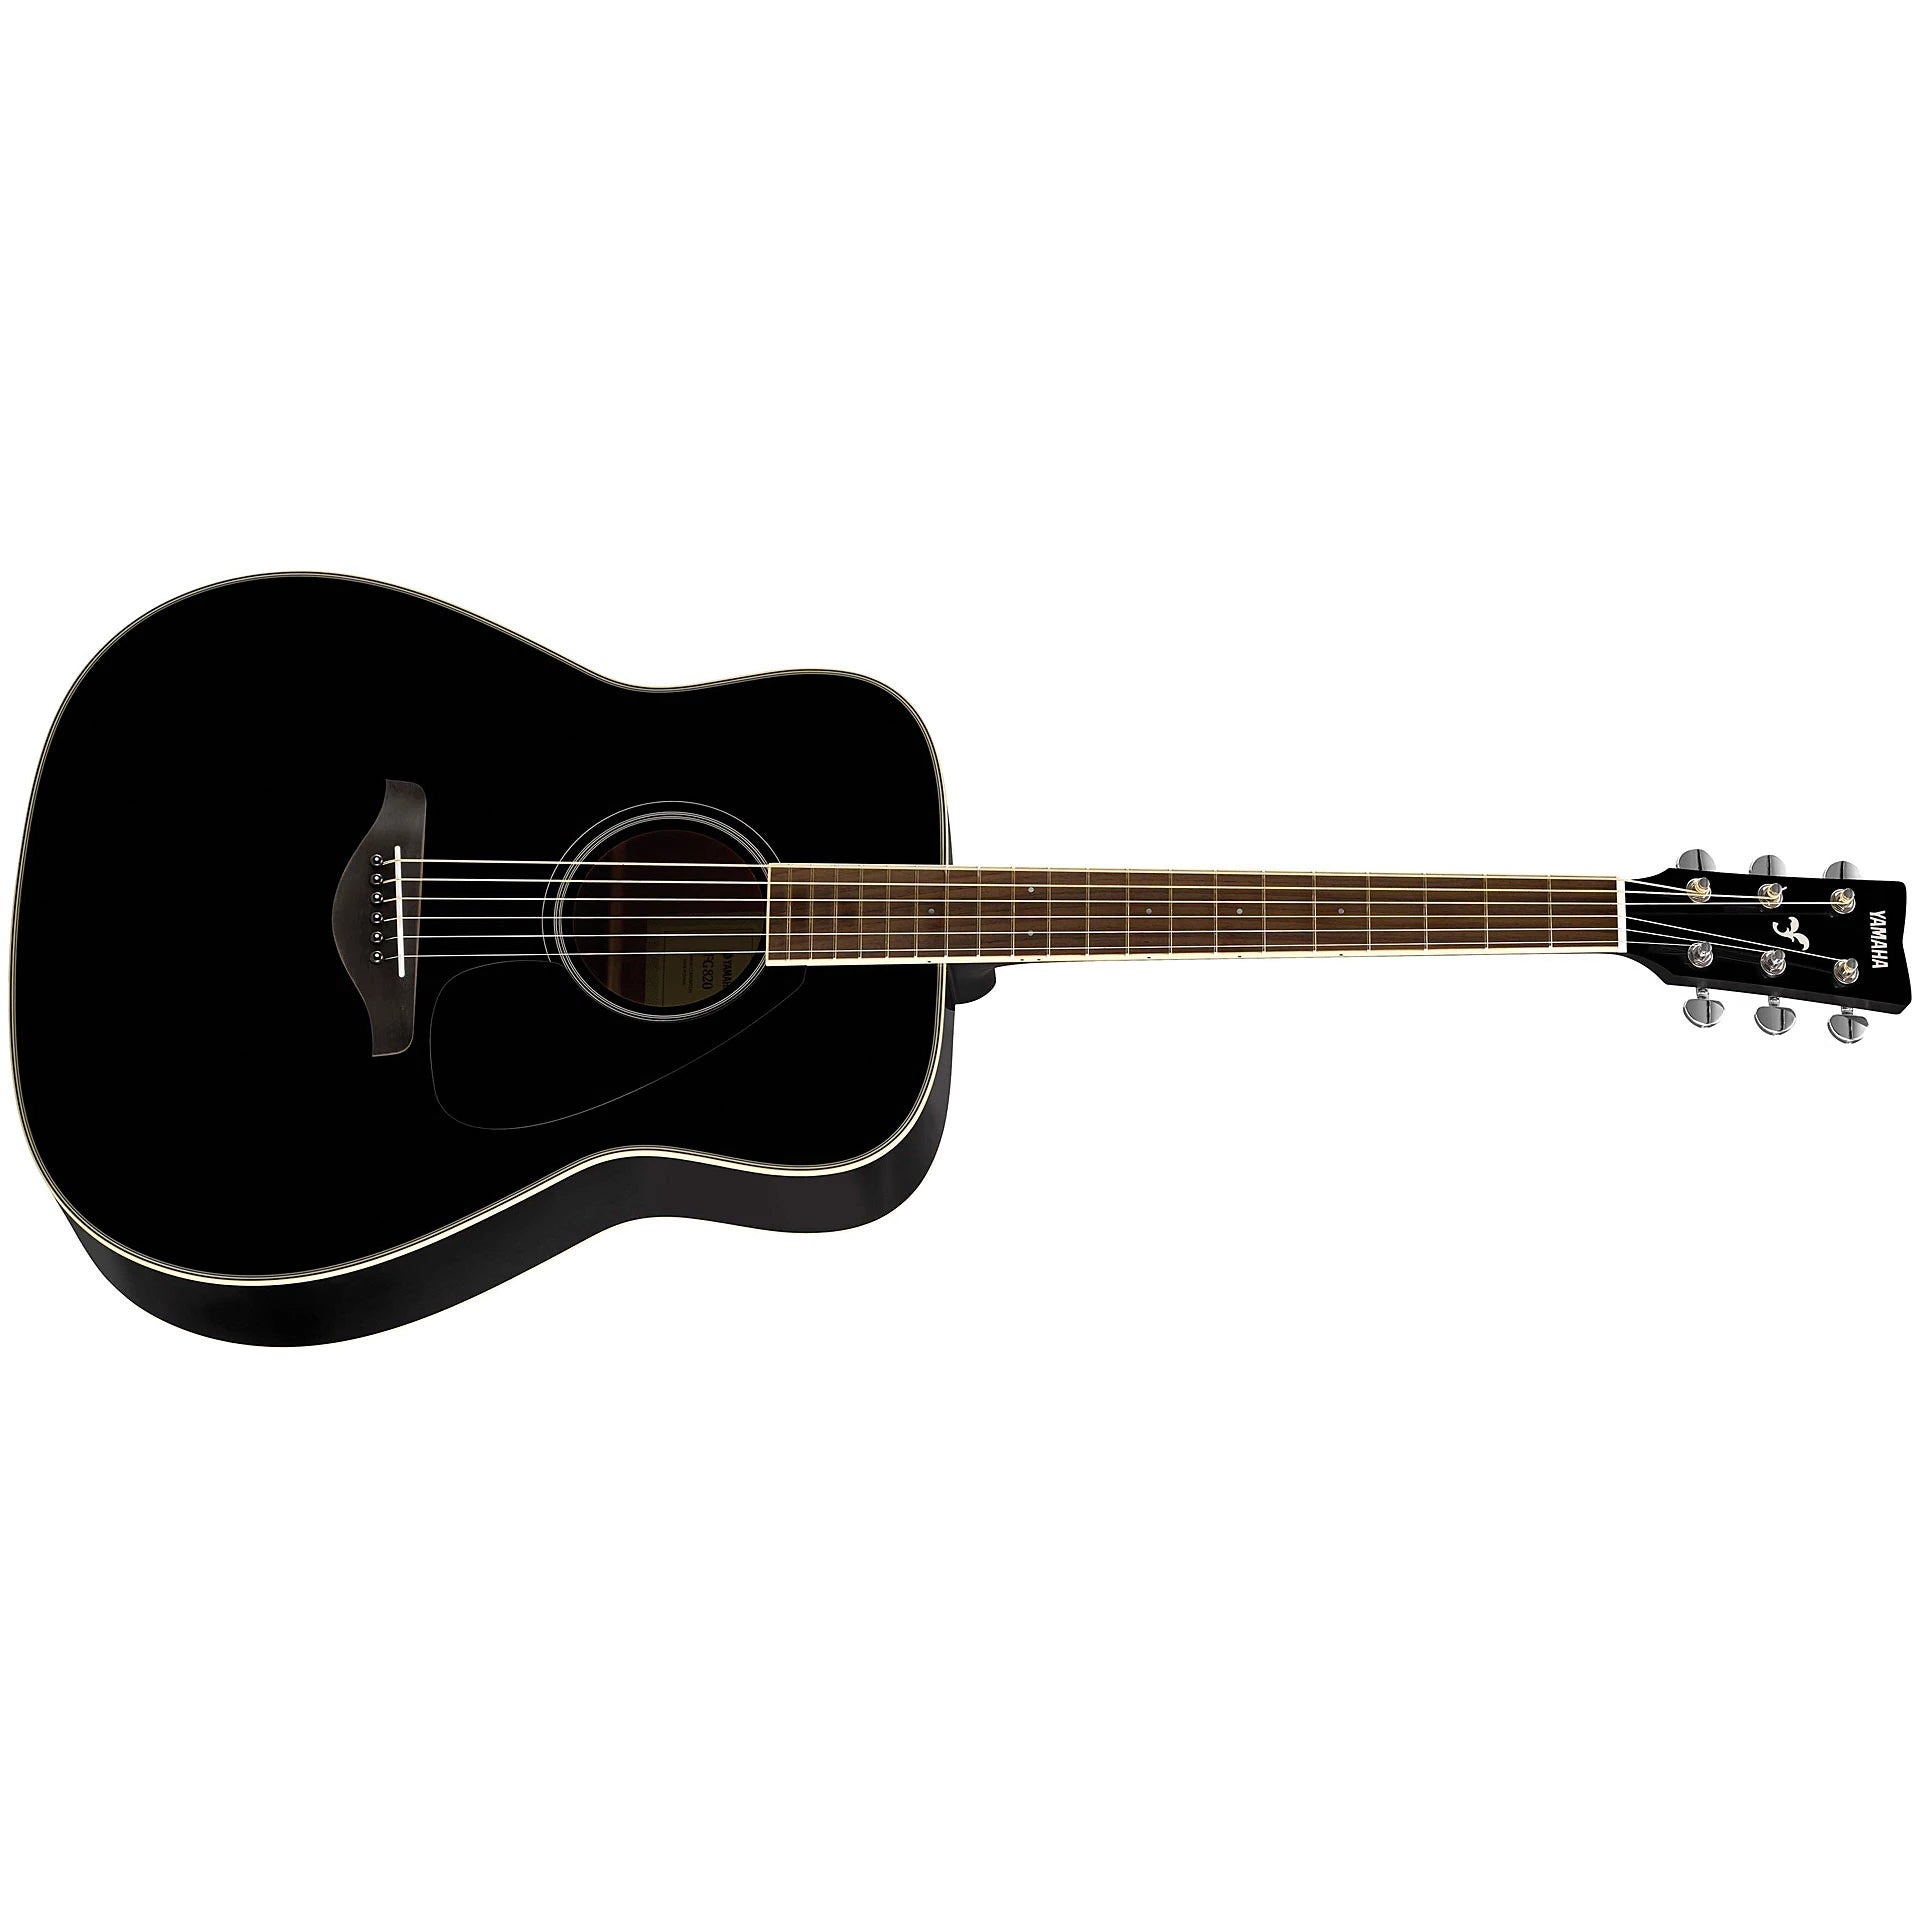 Yamaha FG820 BL in Black finish Acoustic Guitar